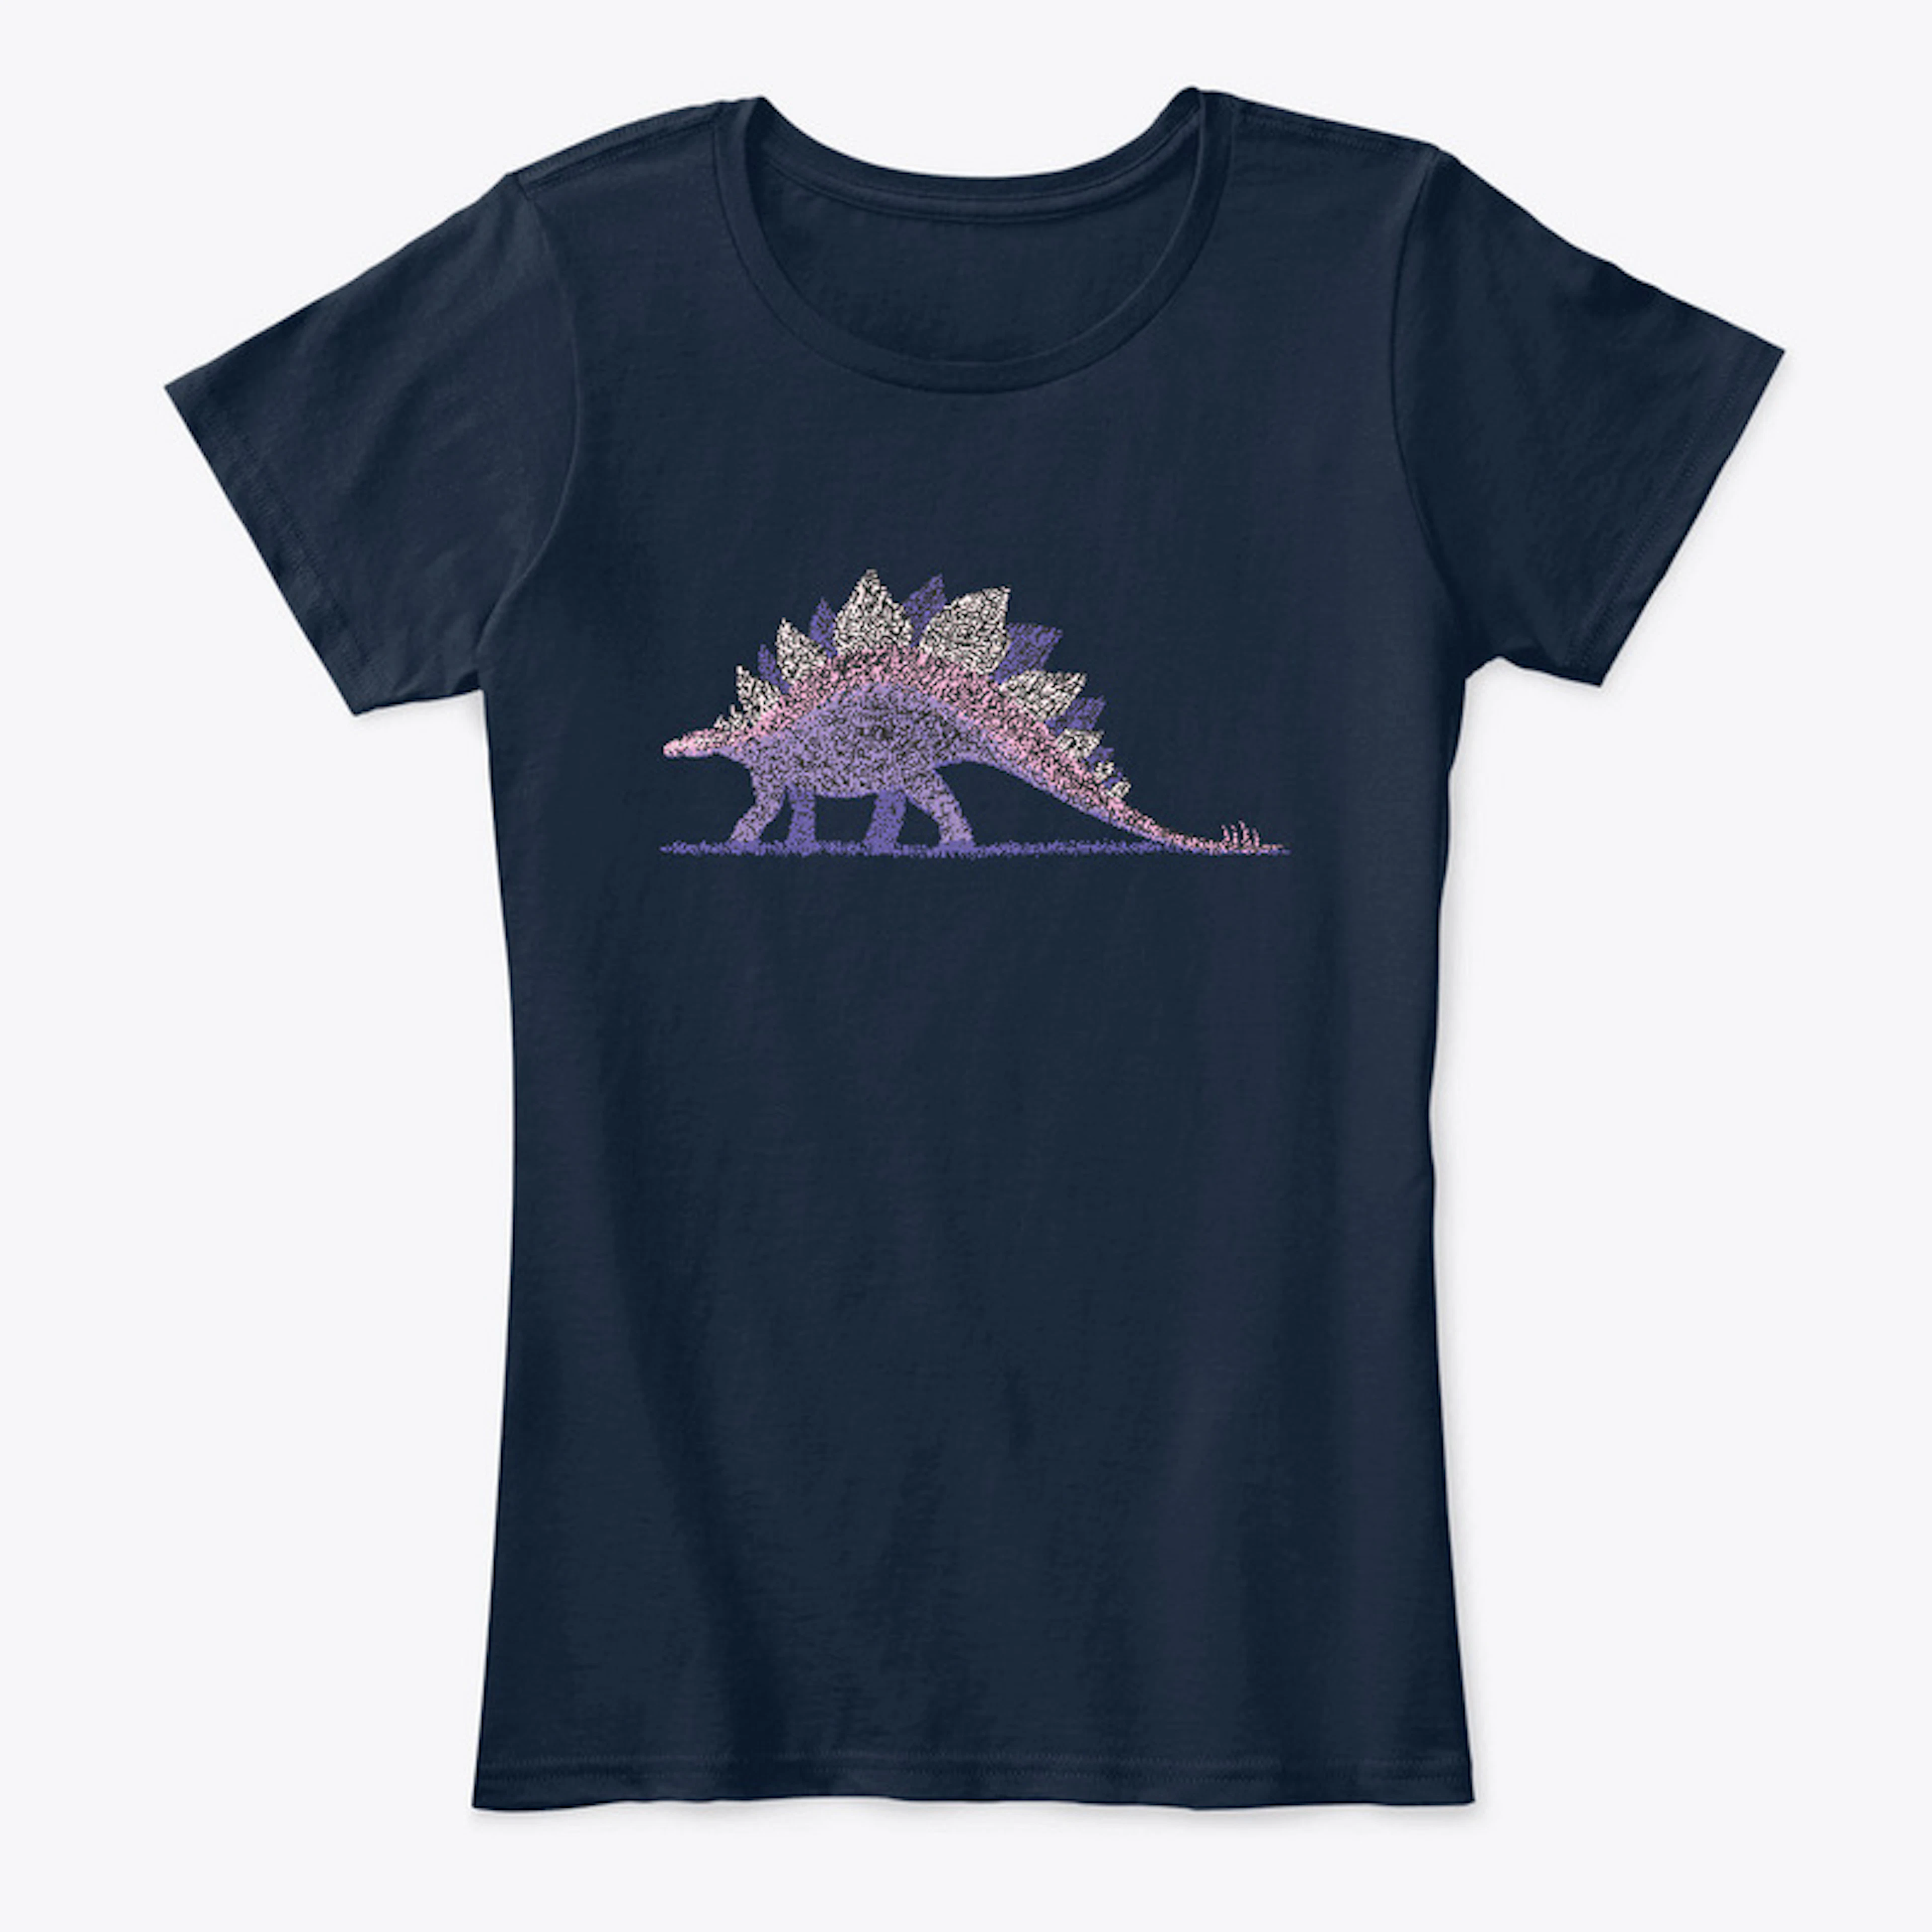 Stegosaurus by dinomodo